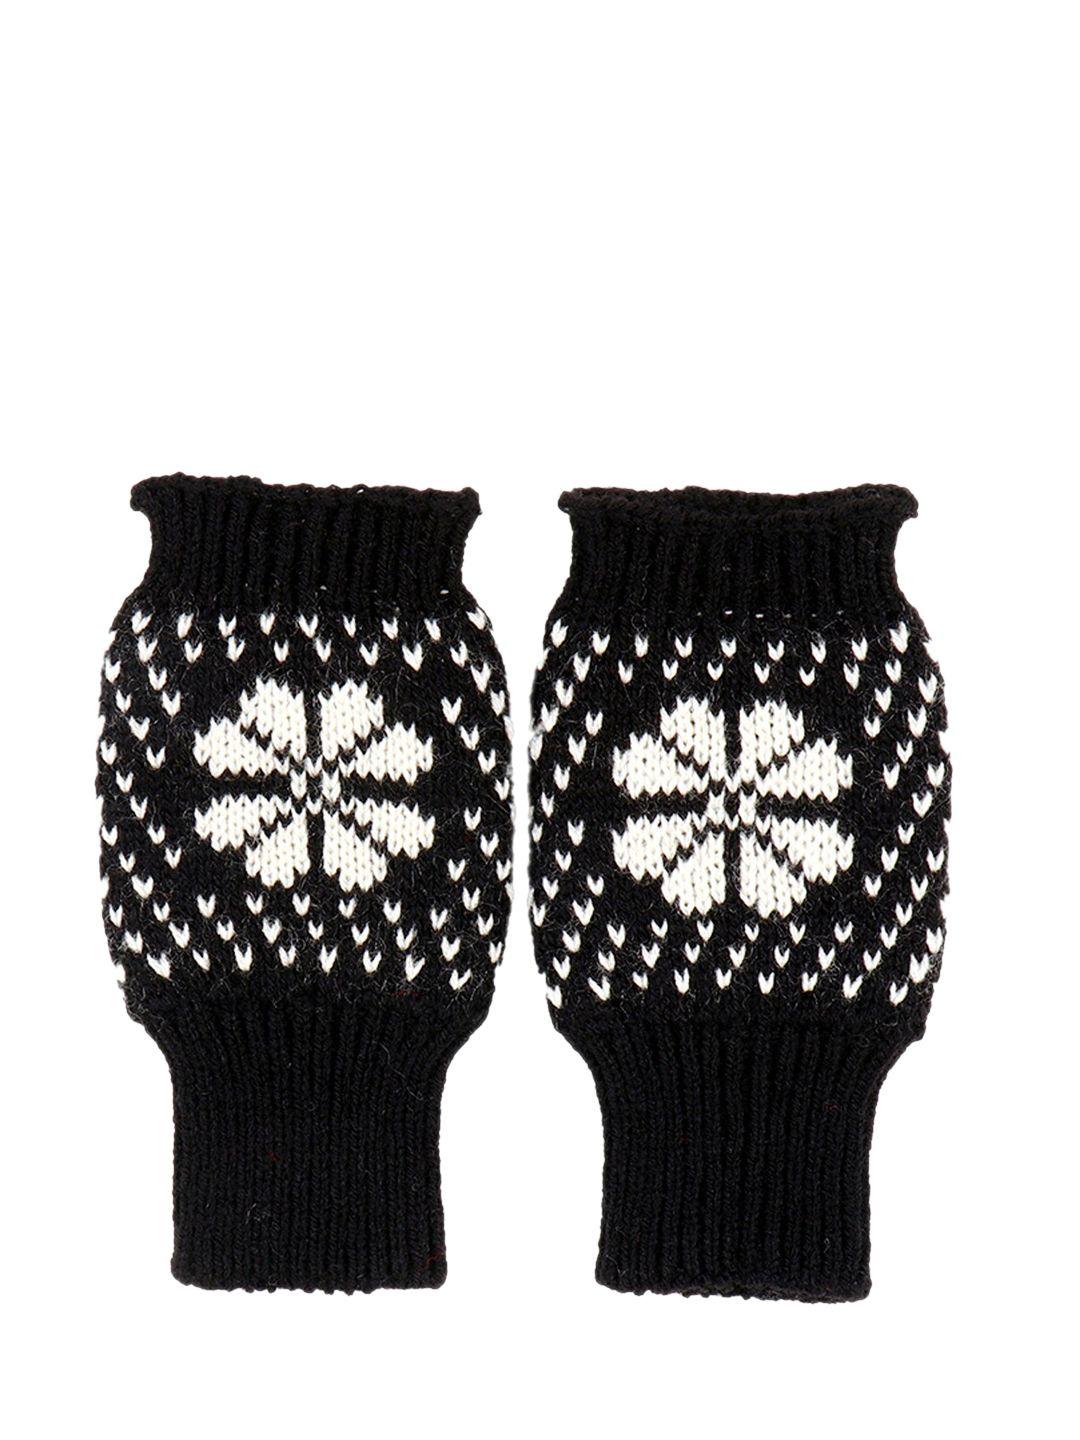 bharatasya kids black & white patterned hand gloves